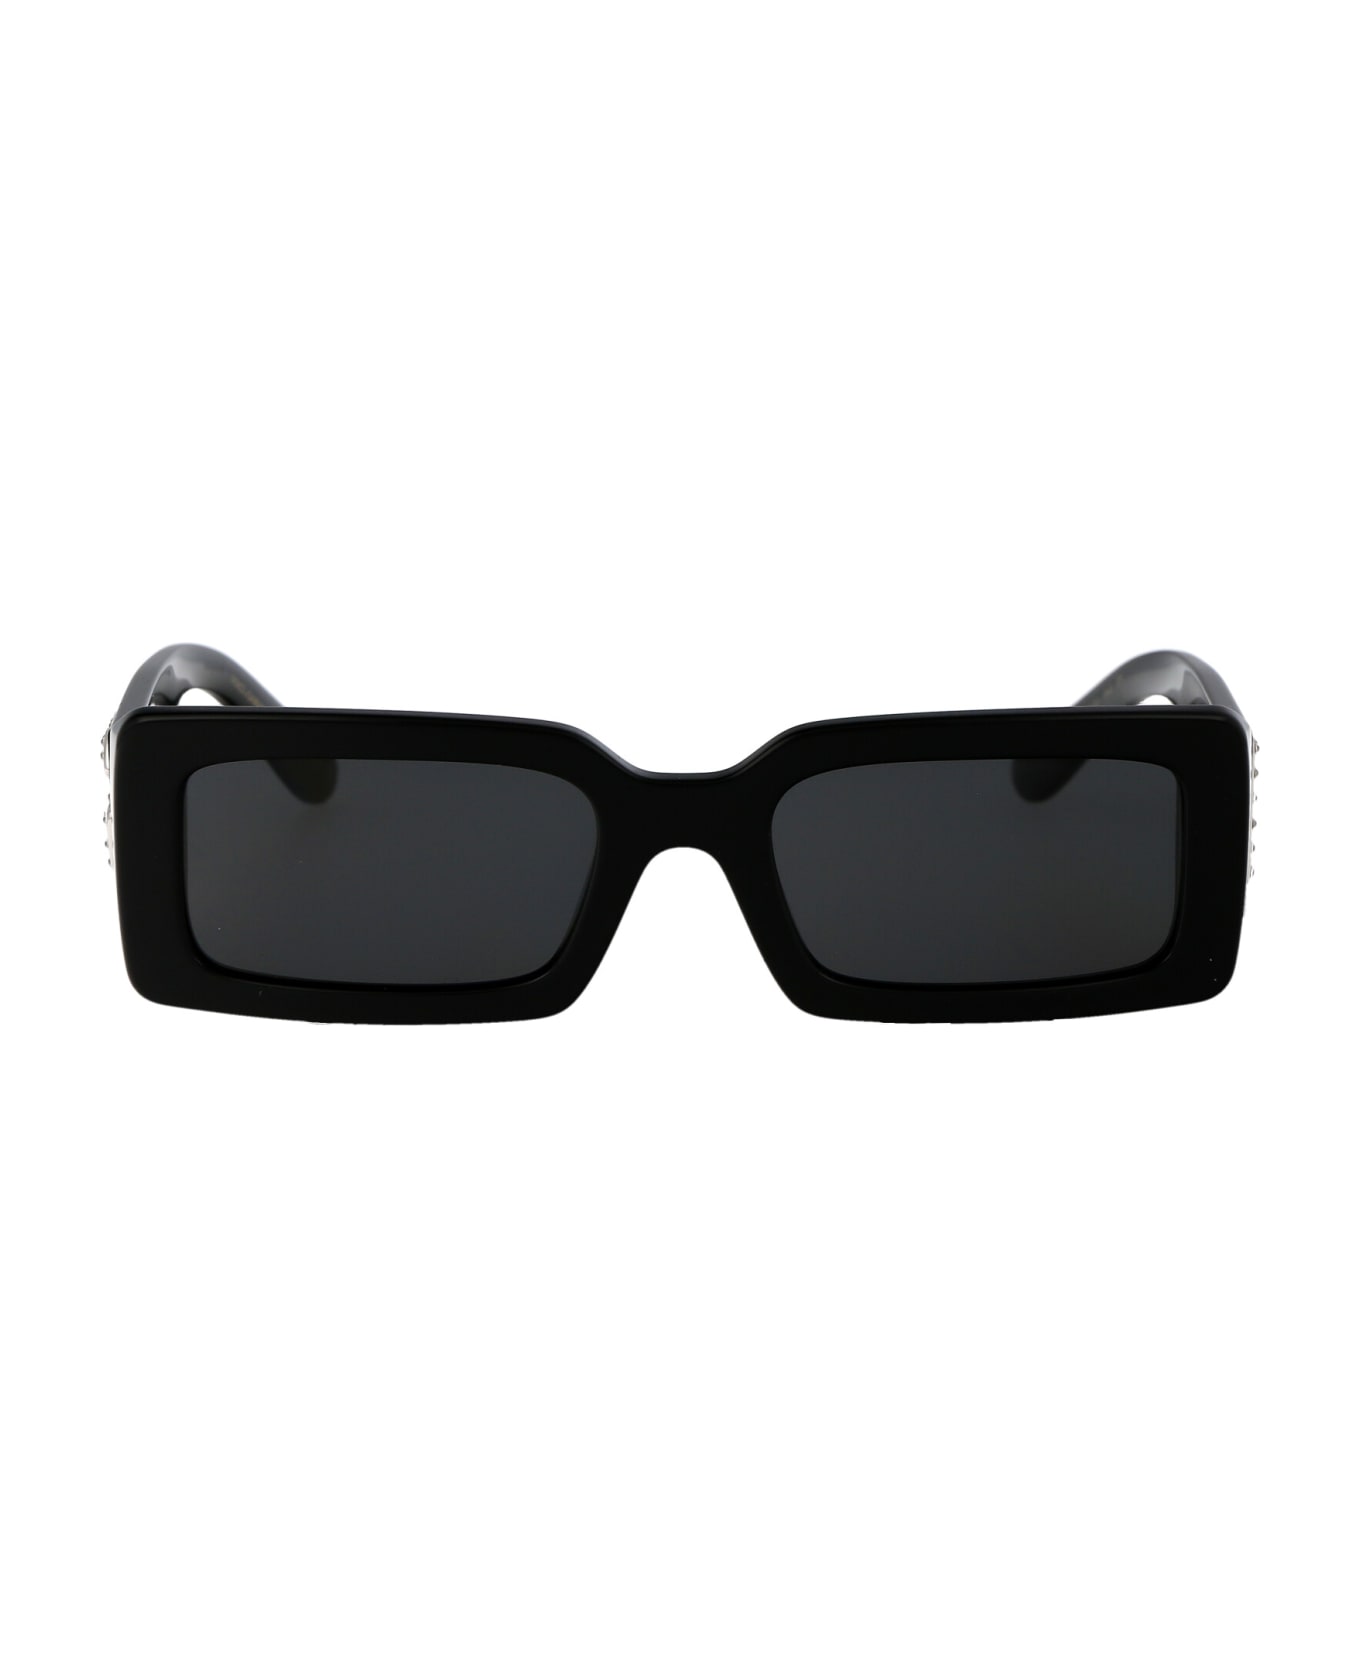 Dolce & Gabbana Eyewear 0dg4447b Sunglasses - 335587 Black